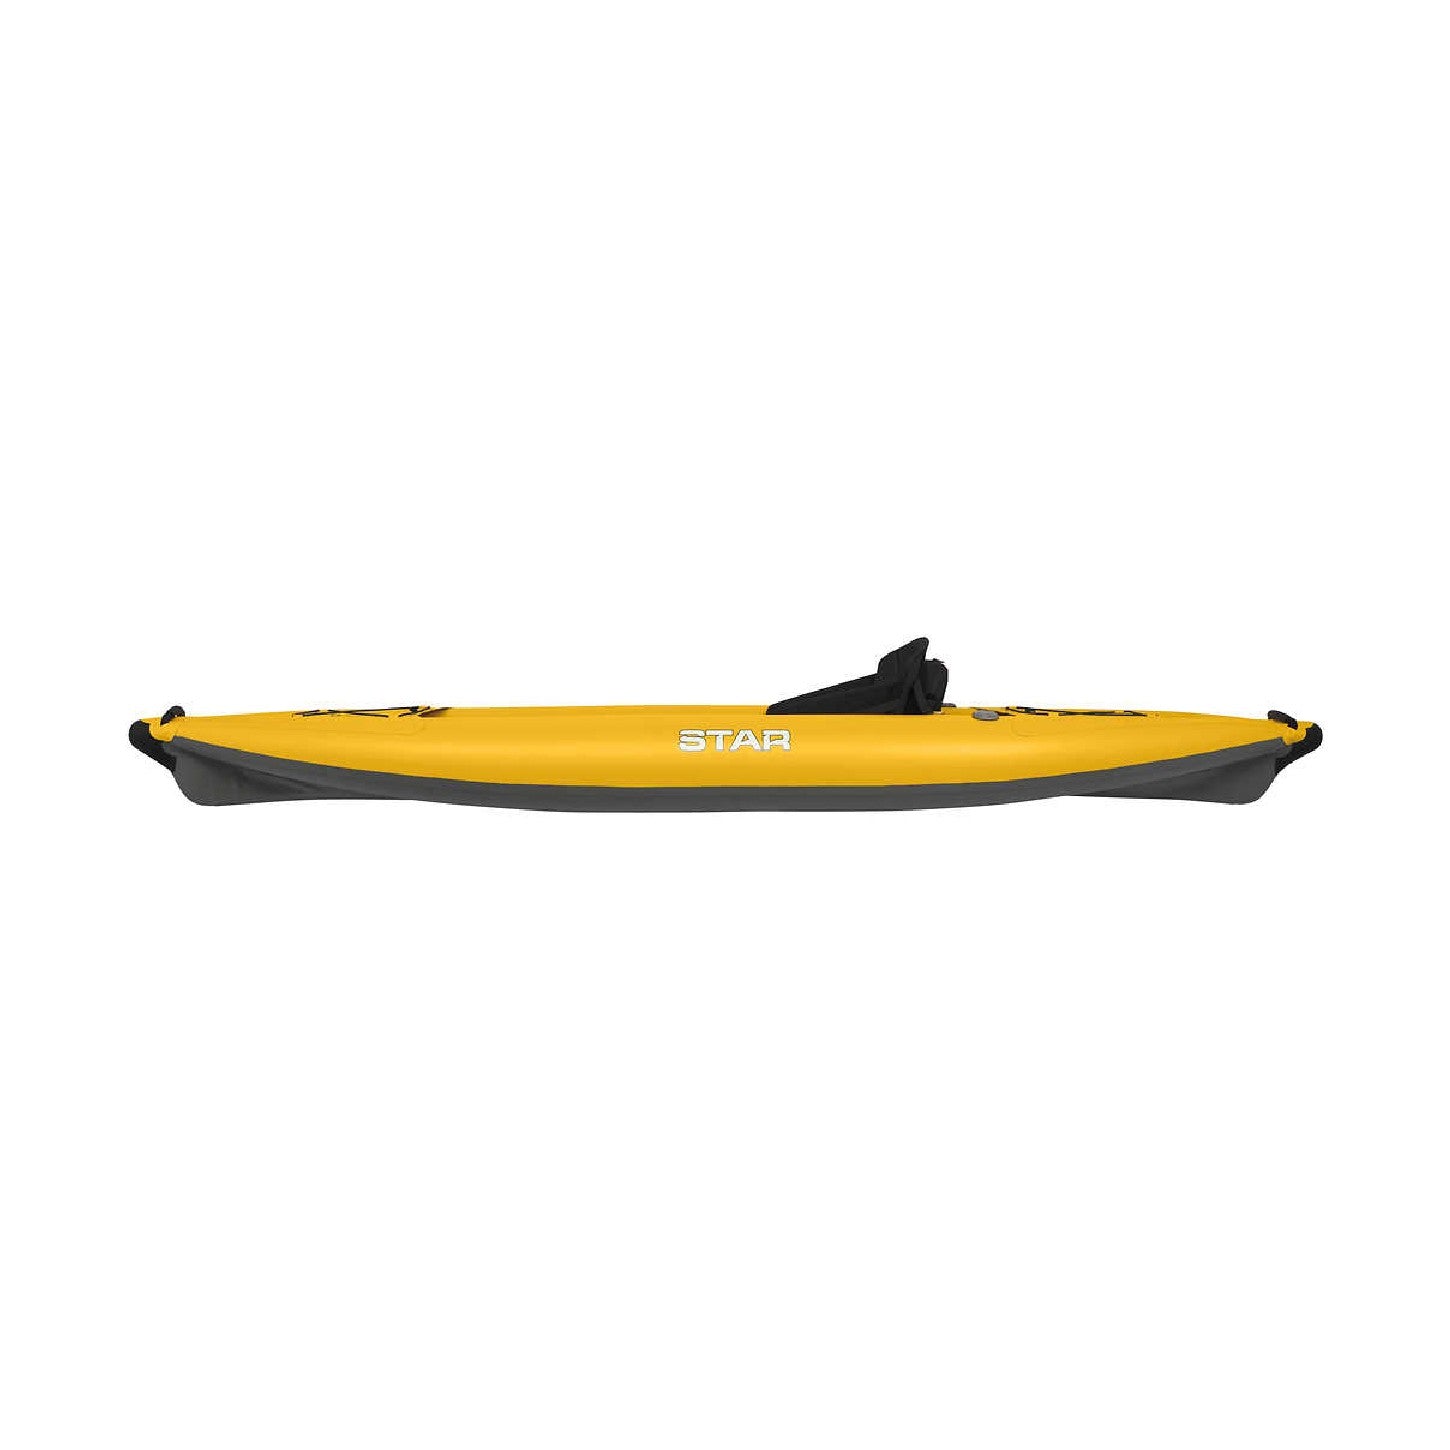 Buy STAR Paragon Inflatable Kayak from NRS Online - Kayak Creek